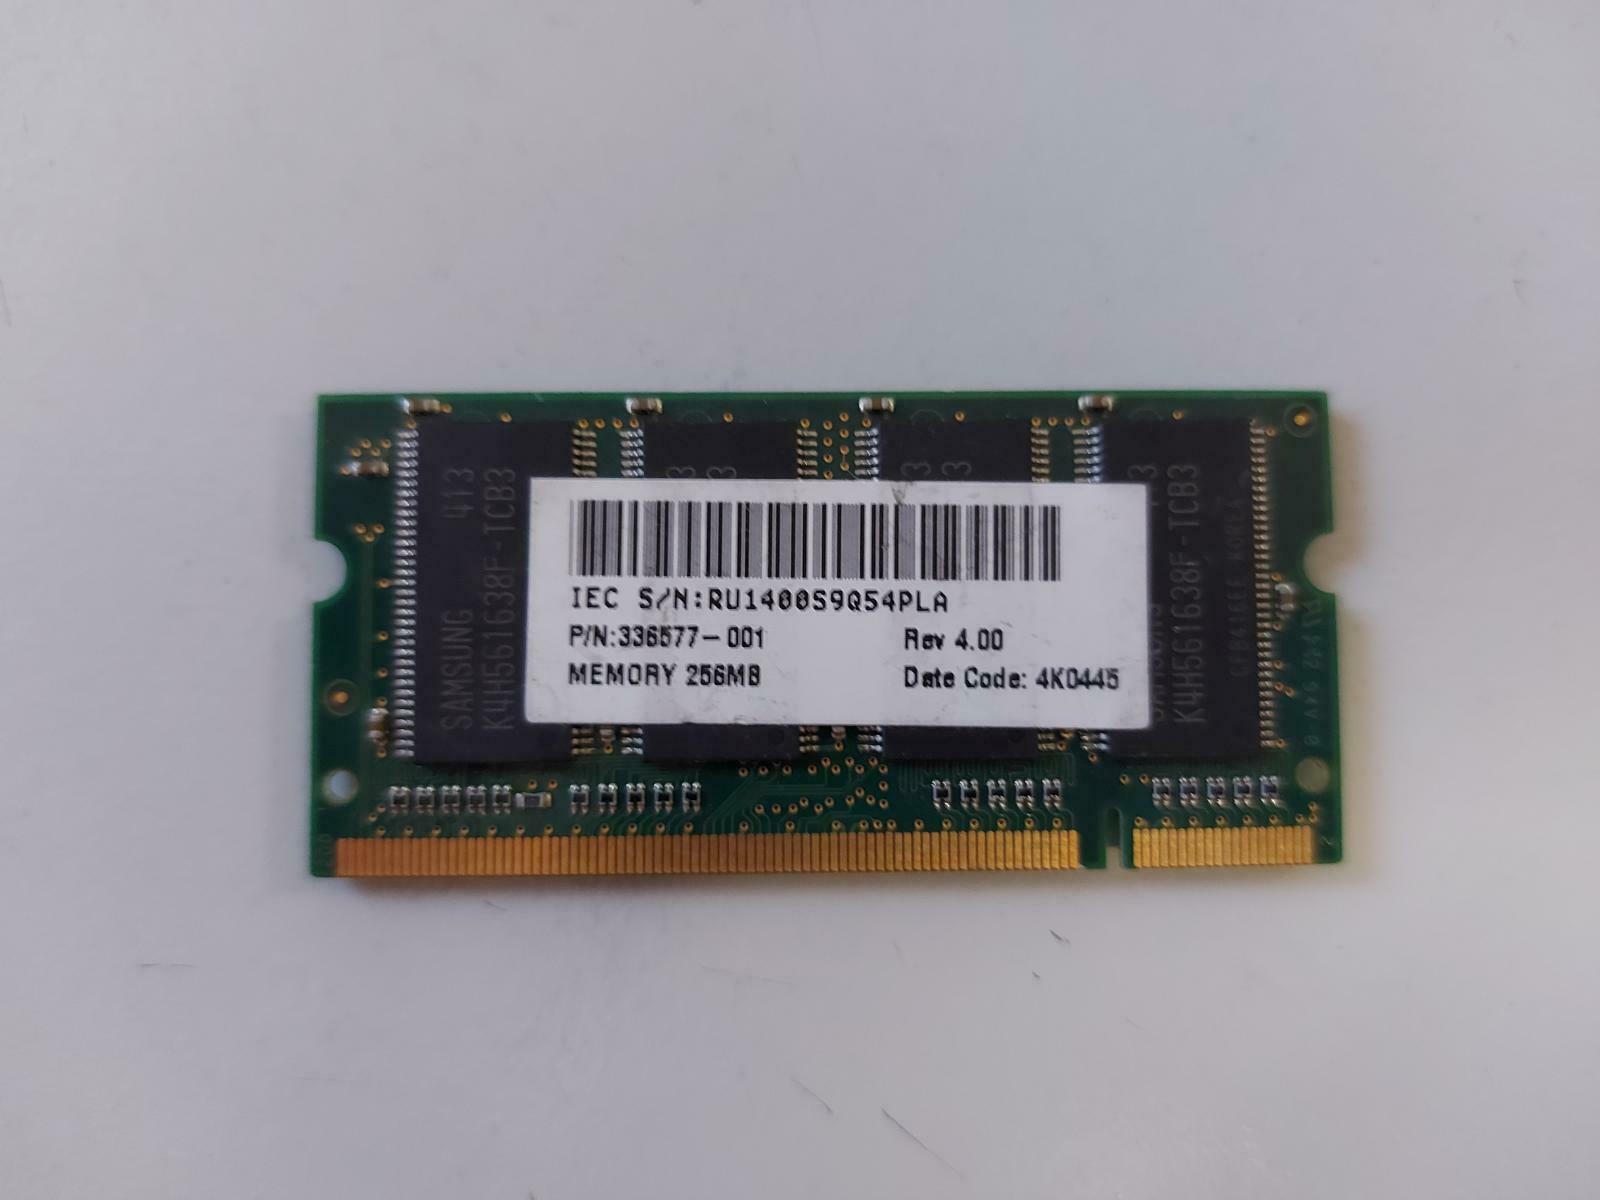 Samsung/HP 256MB PC2700 DDR 200p nonecc CL2.5 SODIMM M470L3224FT0-CB3 336577-001